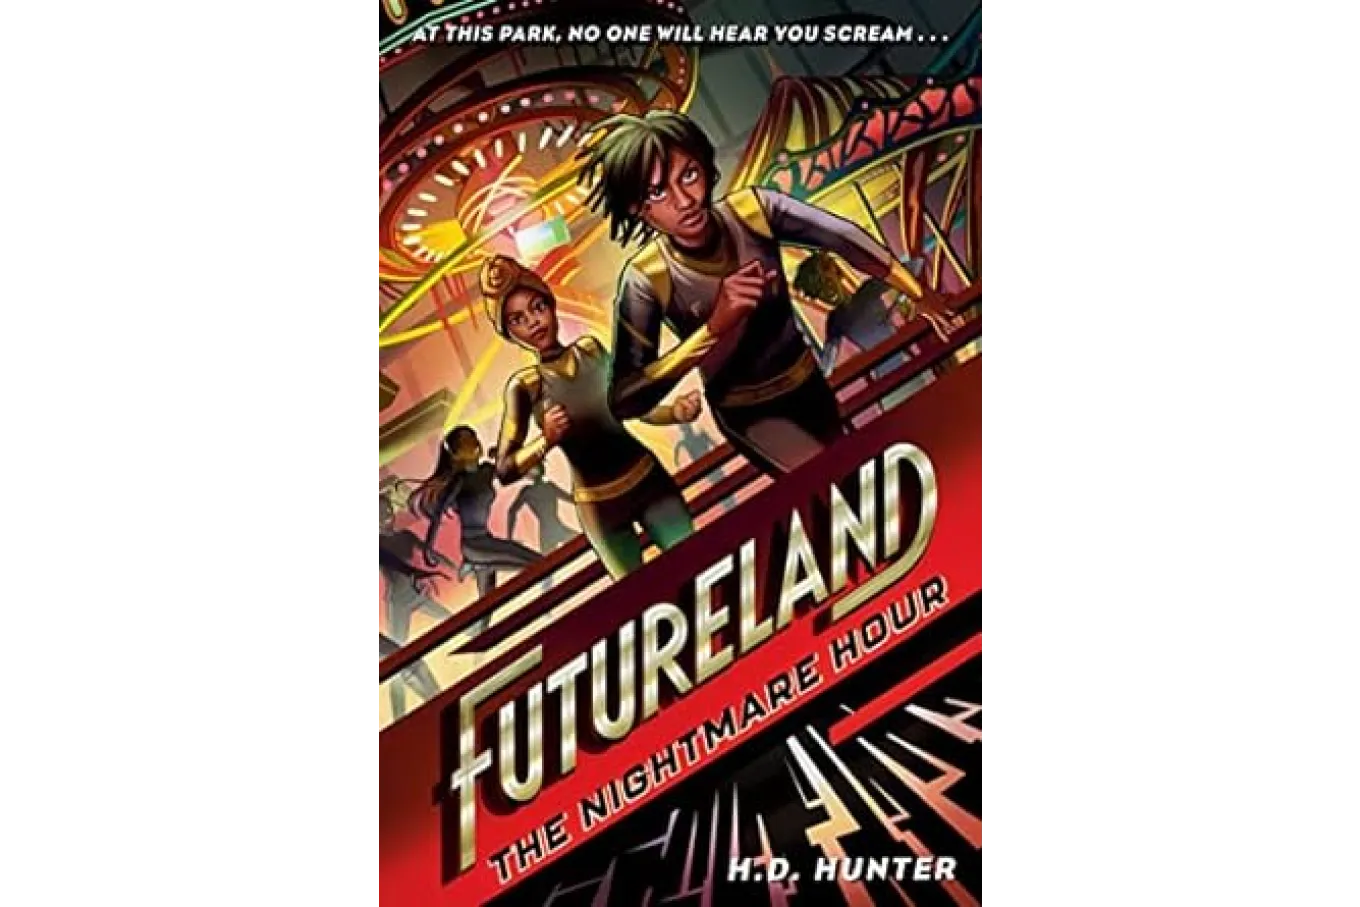 The cover of Futureland